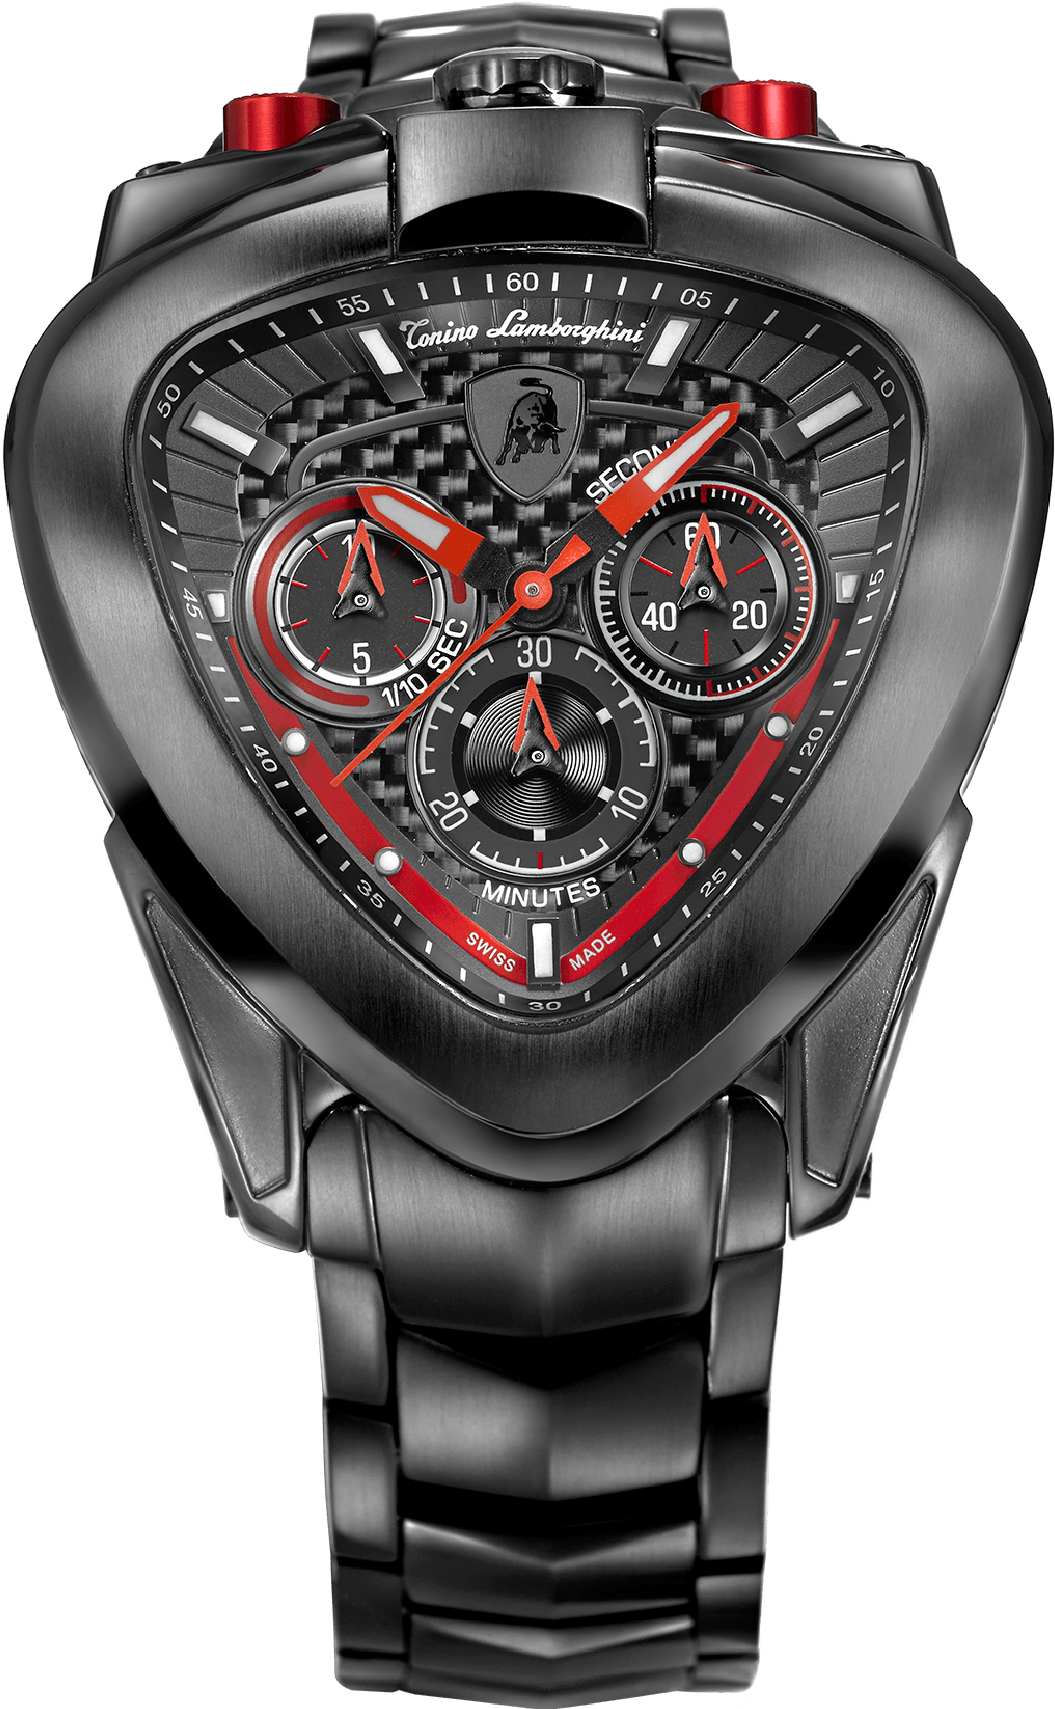 Tonino Lamborghini Watch Style Spyder 12h - Tonino Lamborghini 12h 2 Clipart (1500x2250), Png Download